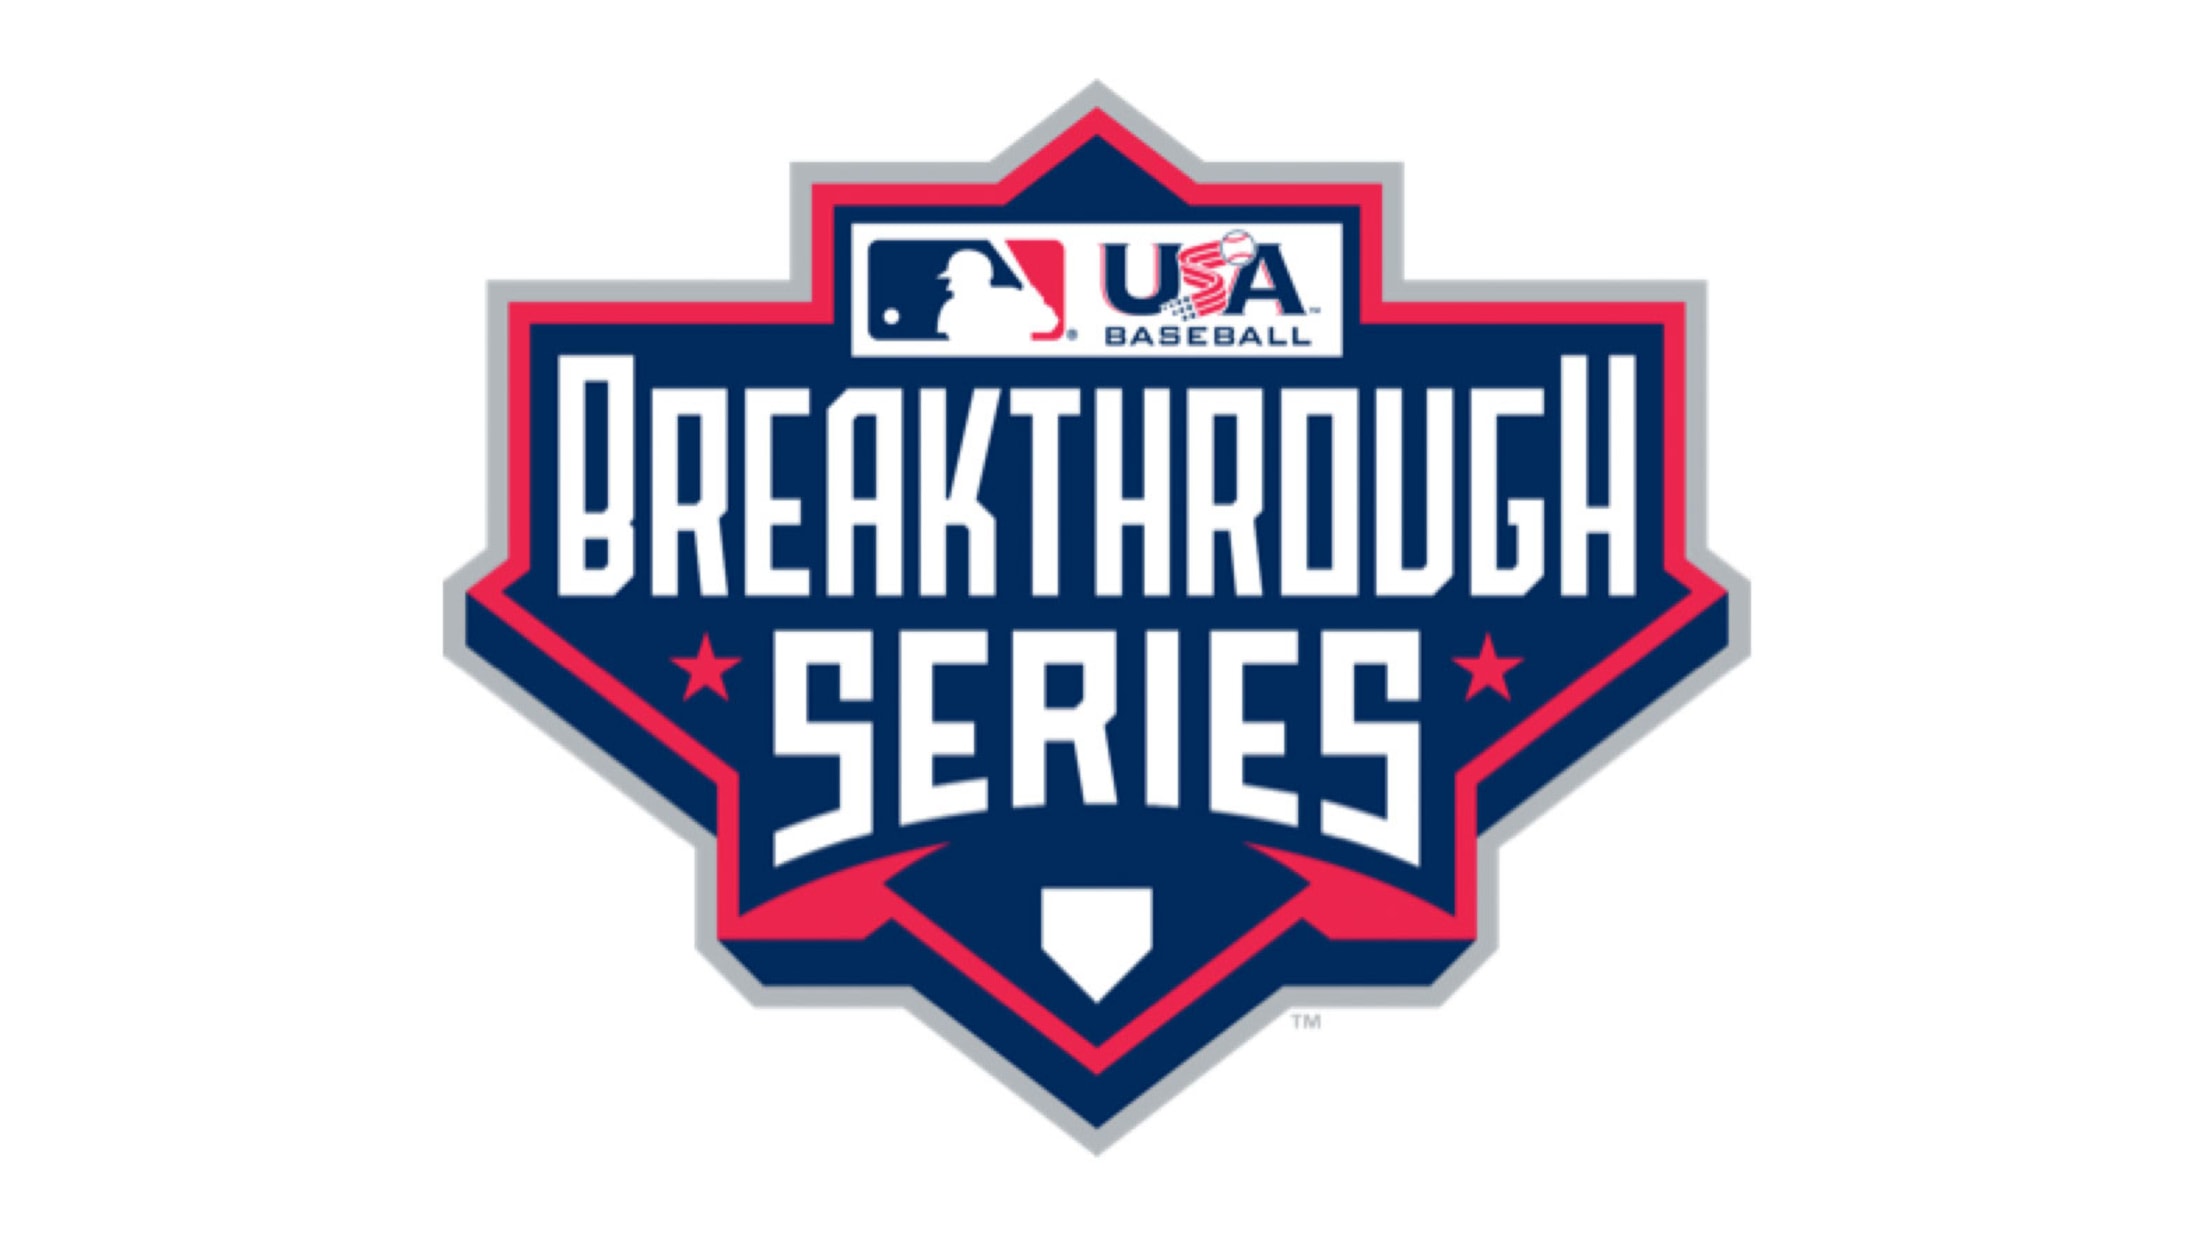 Breakthrough Series About USA Baseball